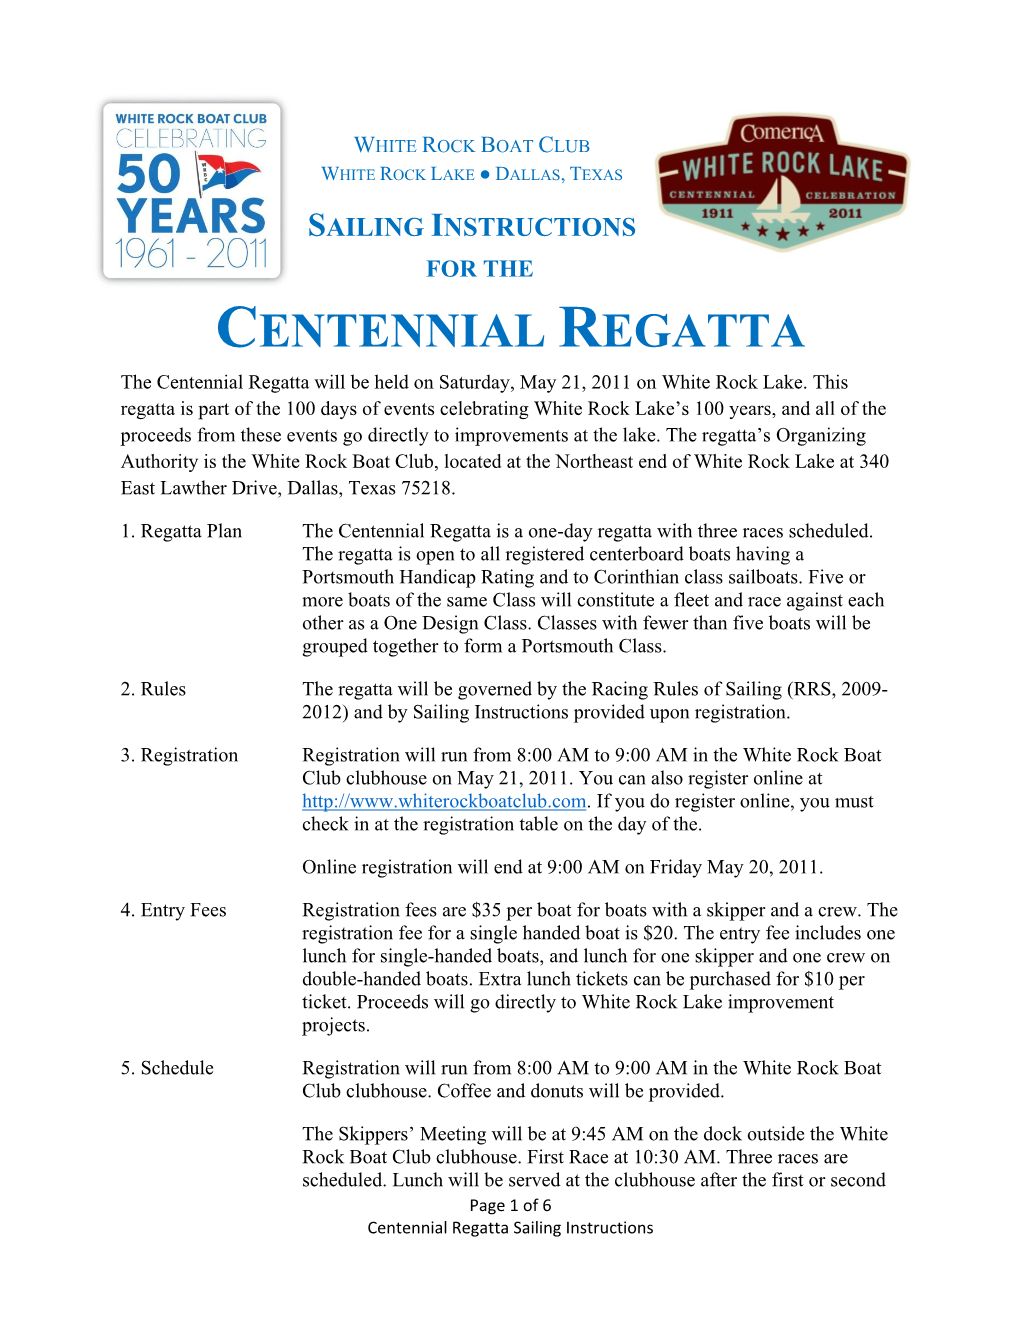 CENTENNIAL REGATTA the Centennial Regatta Will Be Held on Saturday, May 21, 2011 on White Rock Lake